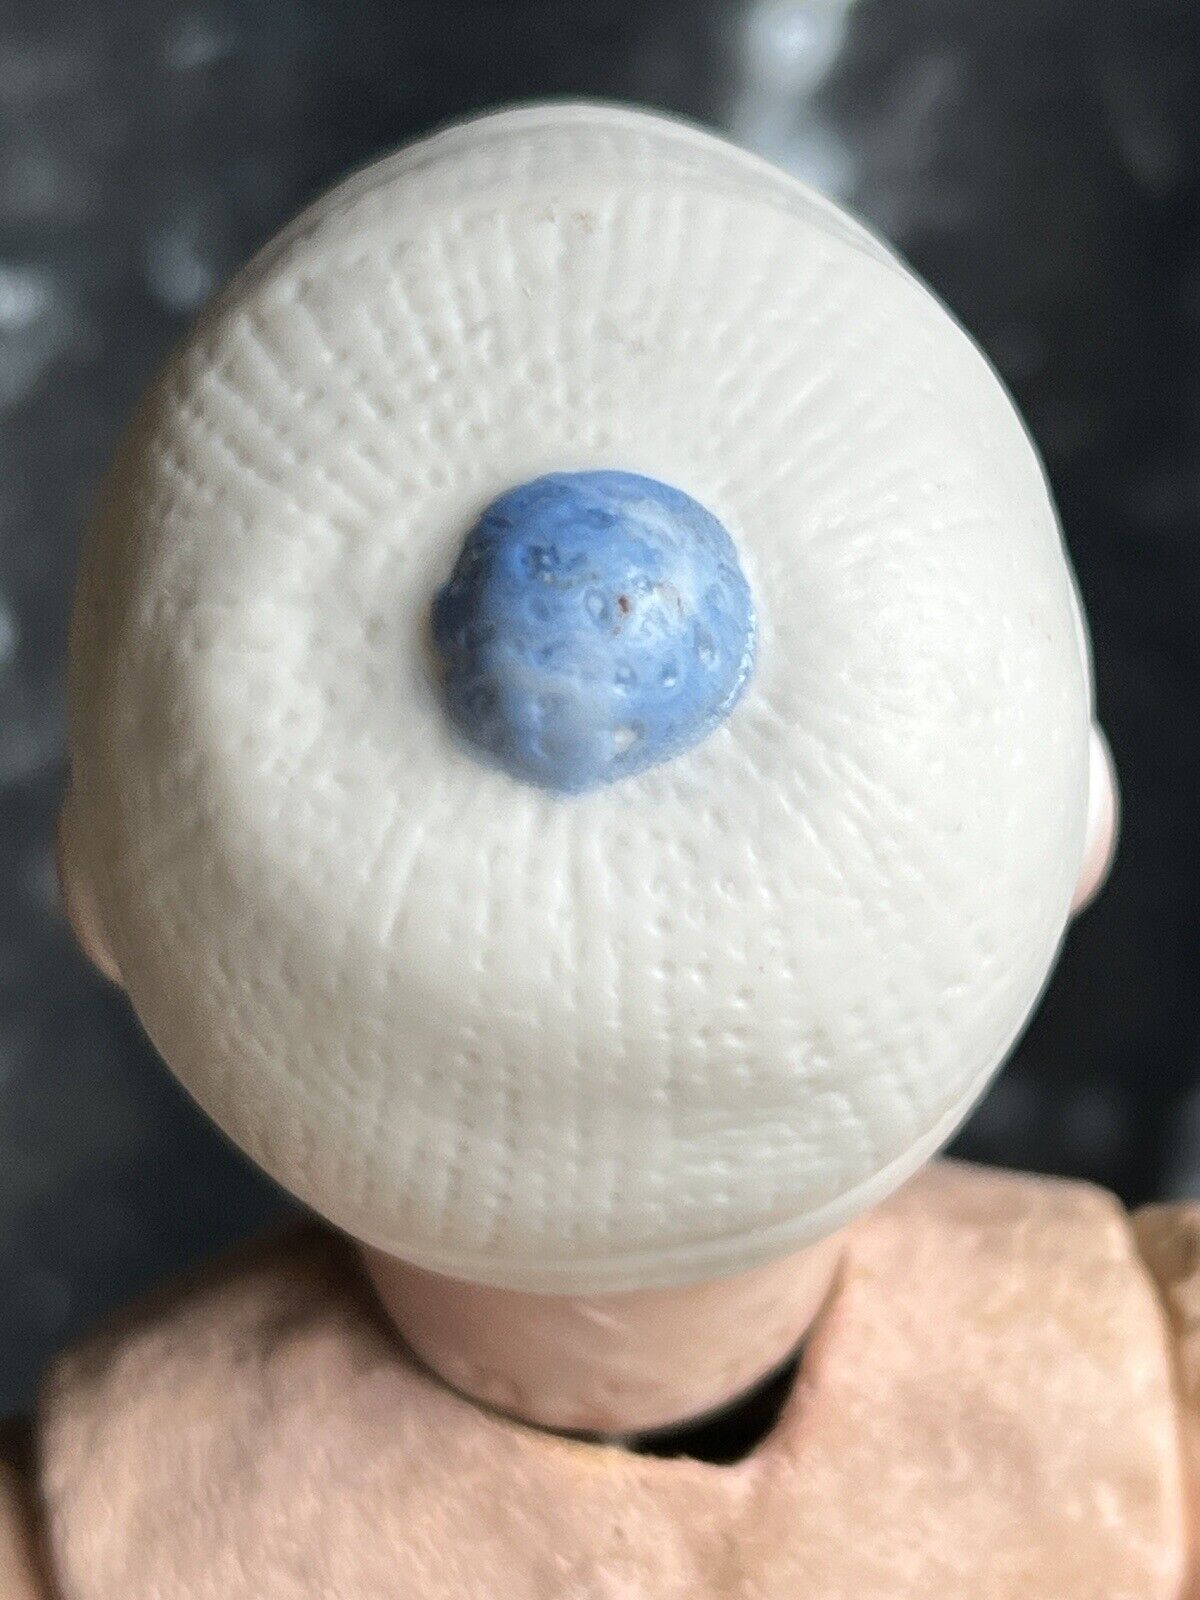 Antique German 8” Theodor Recknagel 28 12/0 Bisque Head Molded Hat Baby Doll